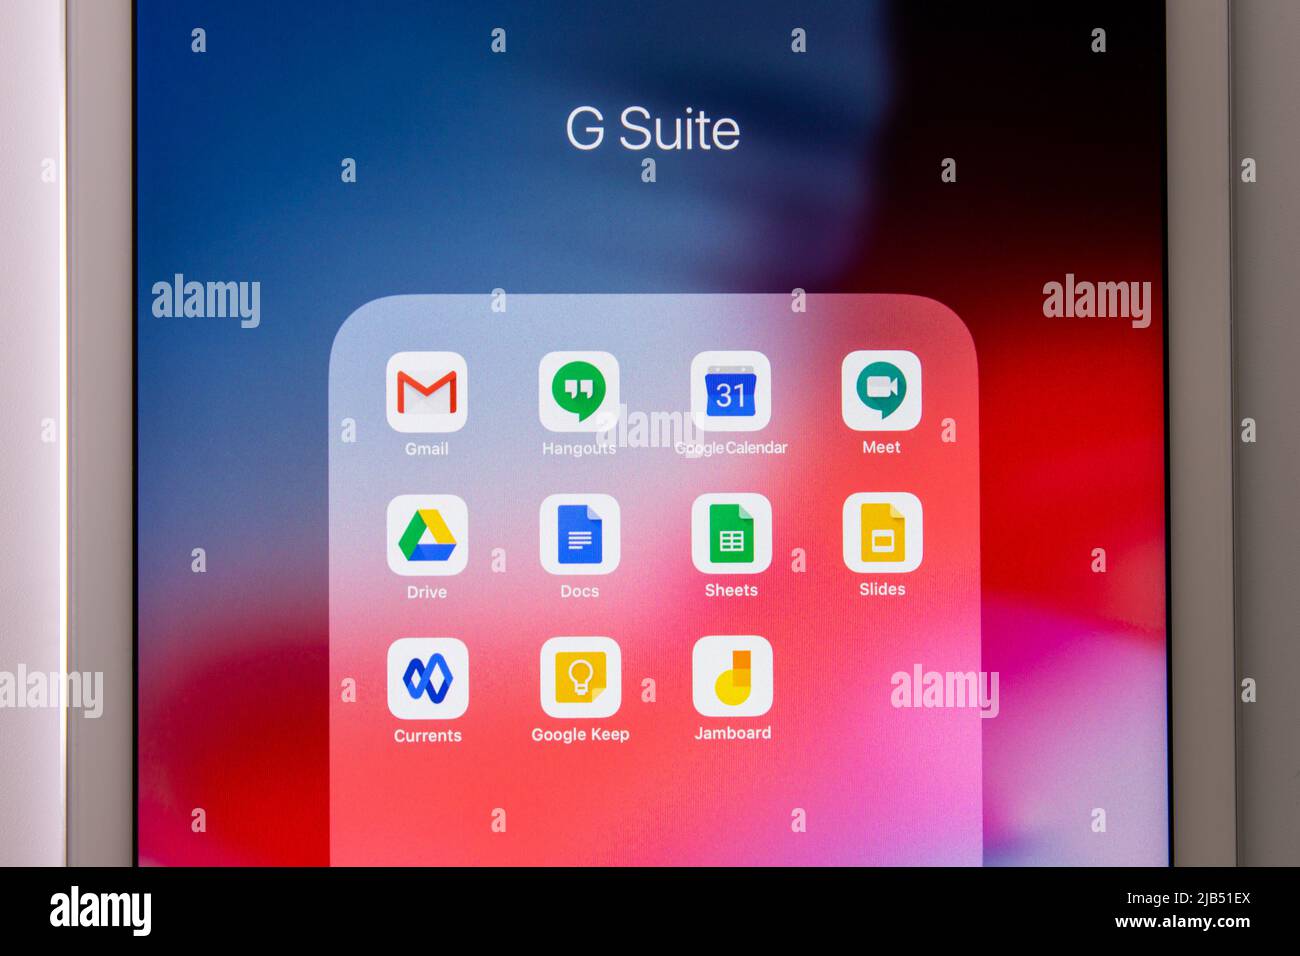 Kumamoto / JAPAN - Oct 3 2020 : G Suite (Gmail, Hangouts, Calendar, Meet, Drive, Docs, Sheets, Slides, Currents, Keep & Jamboard) by Google on iPad Stock Photo